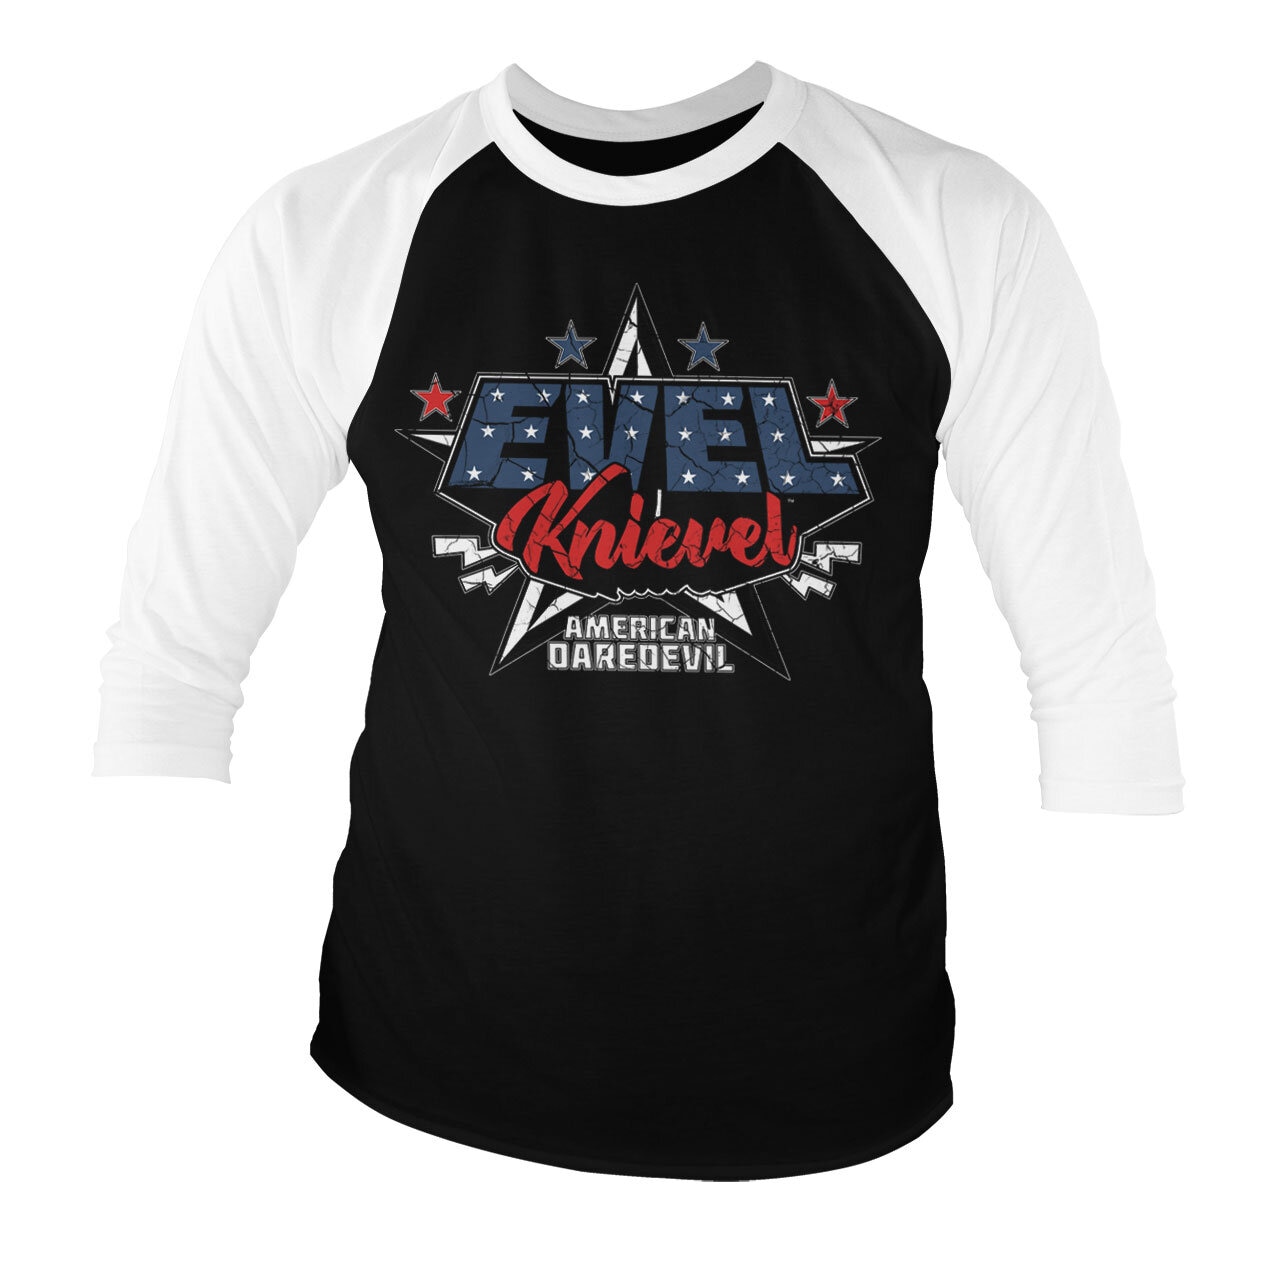 Evel Knievel - American Daredevil Baseball 3/4 Sleeve Tee